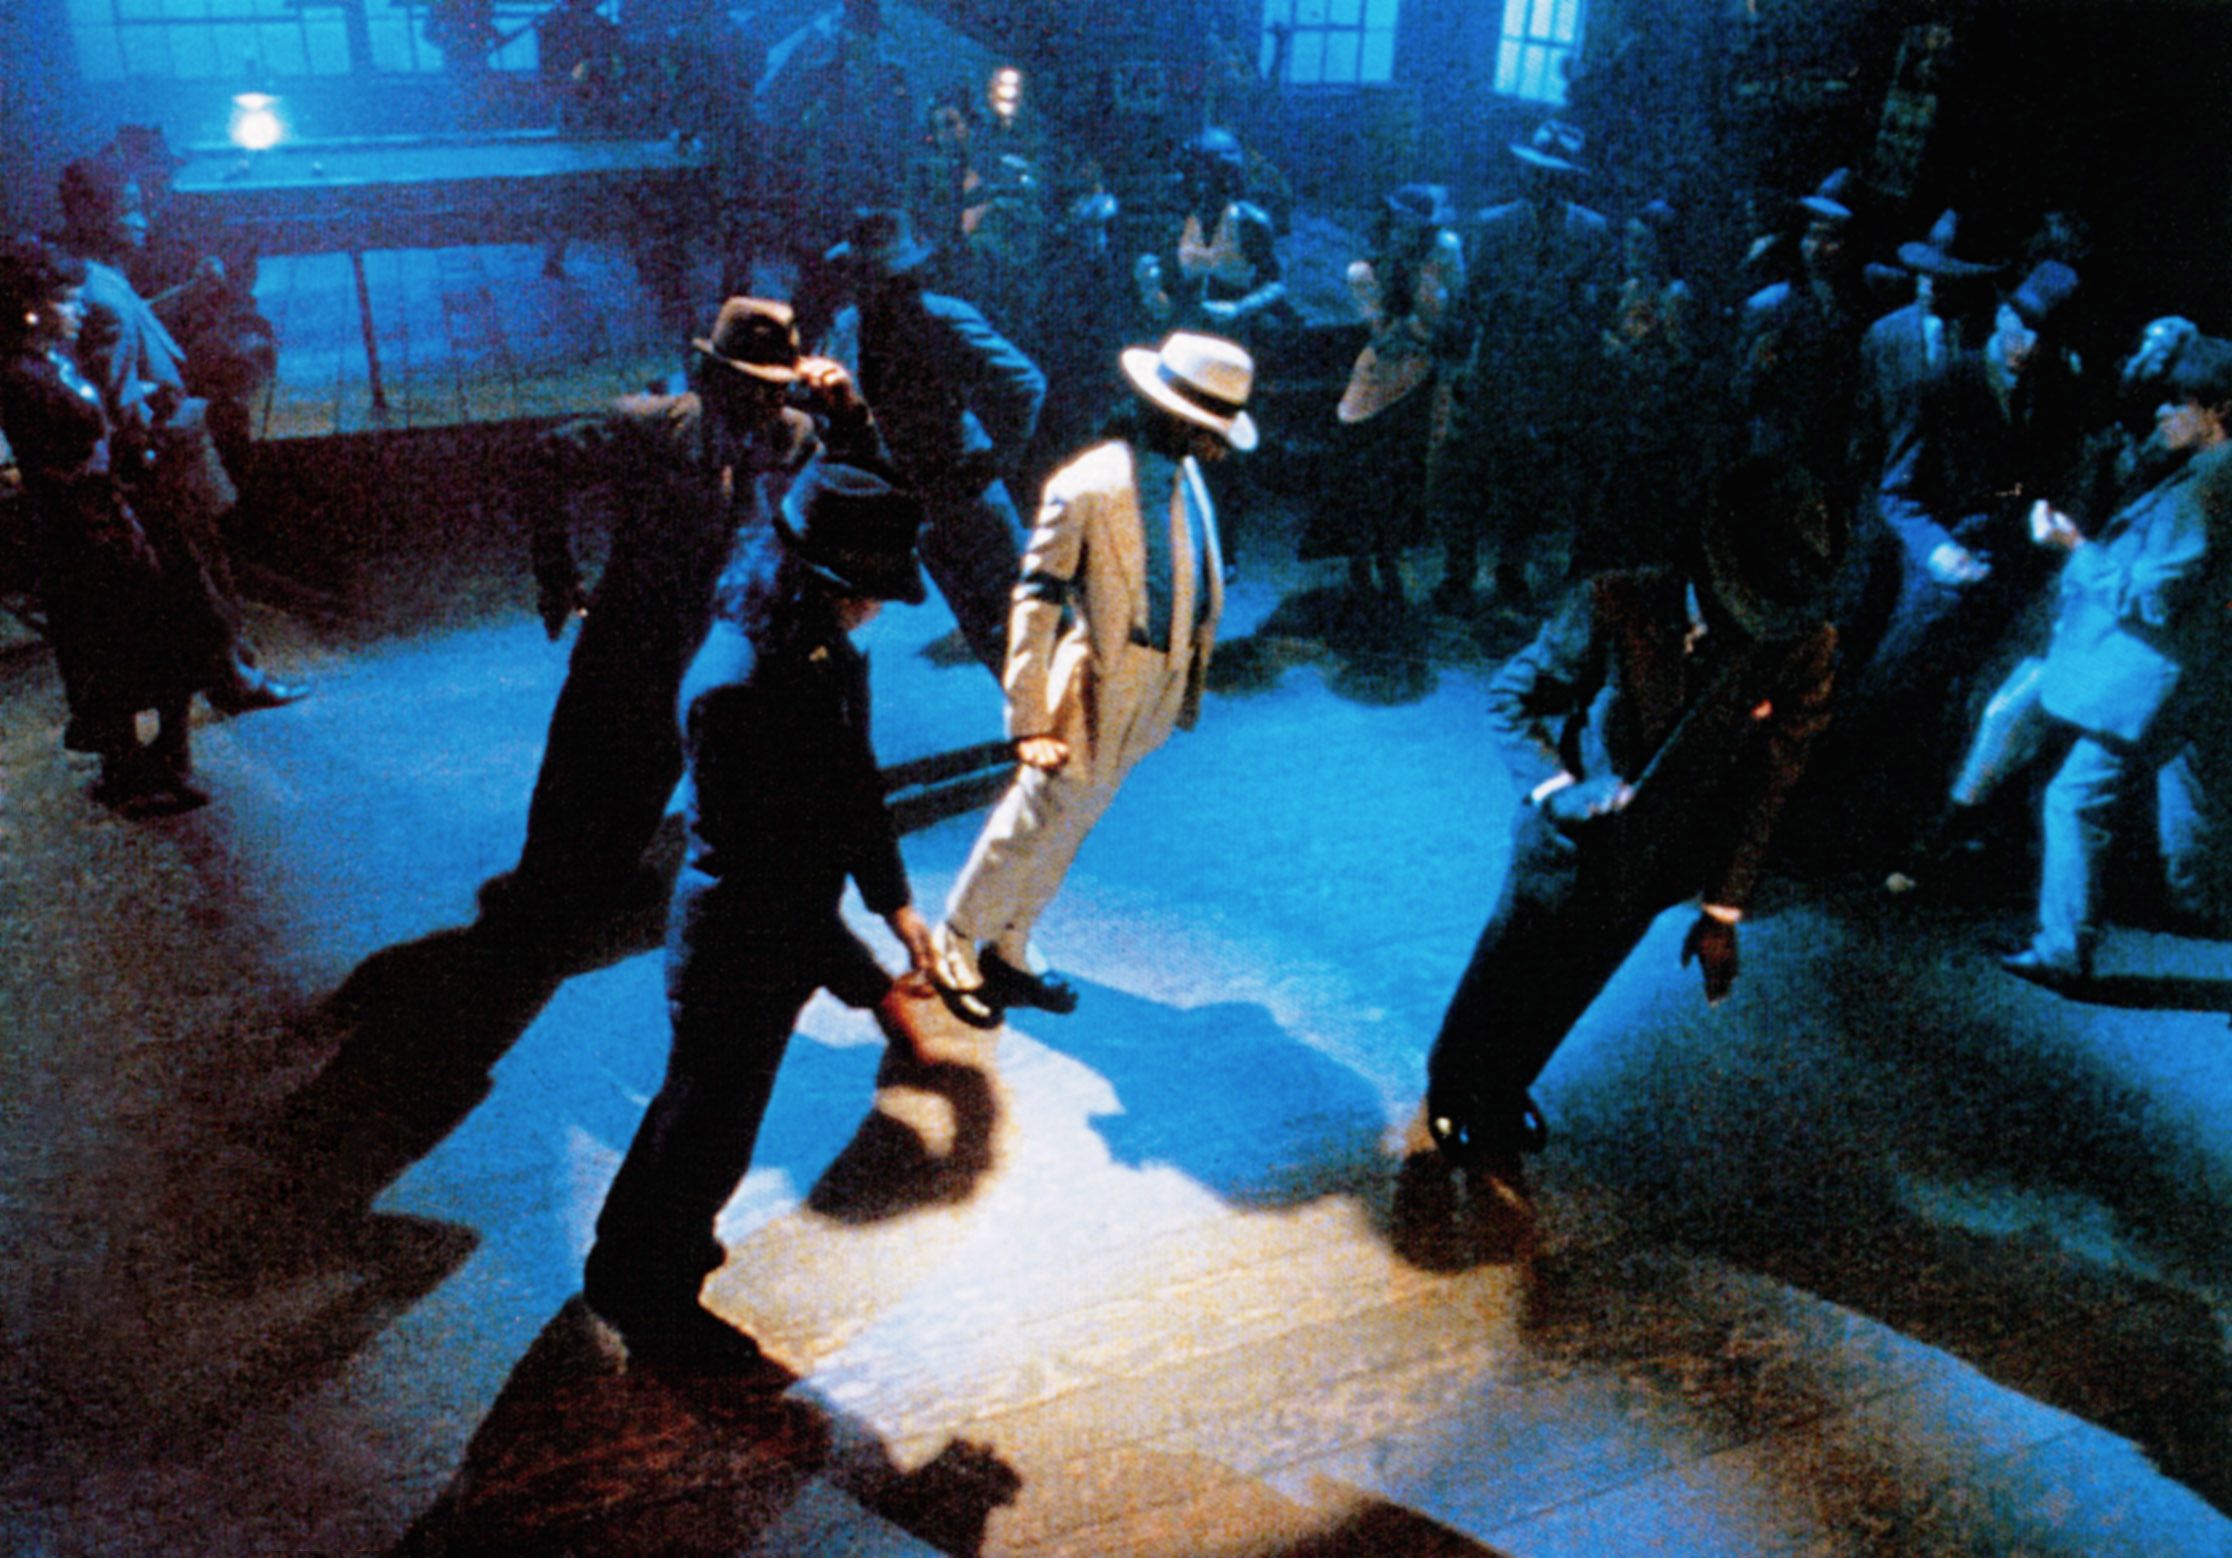 Michael Jackson: Biography, Musician, Dancer